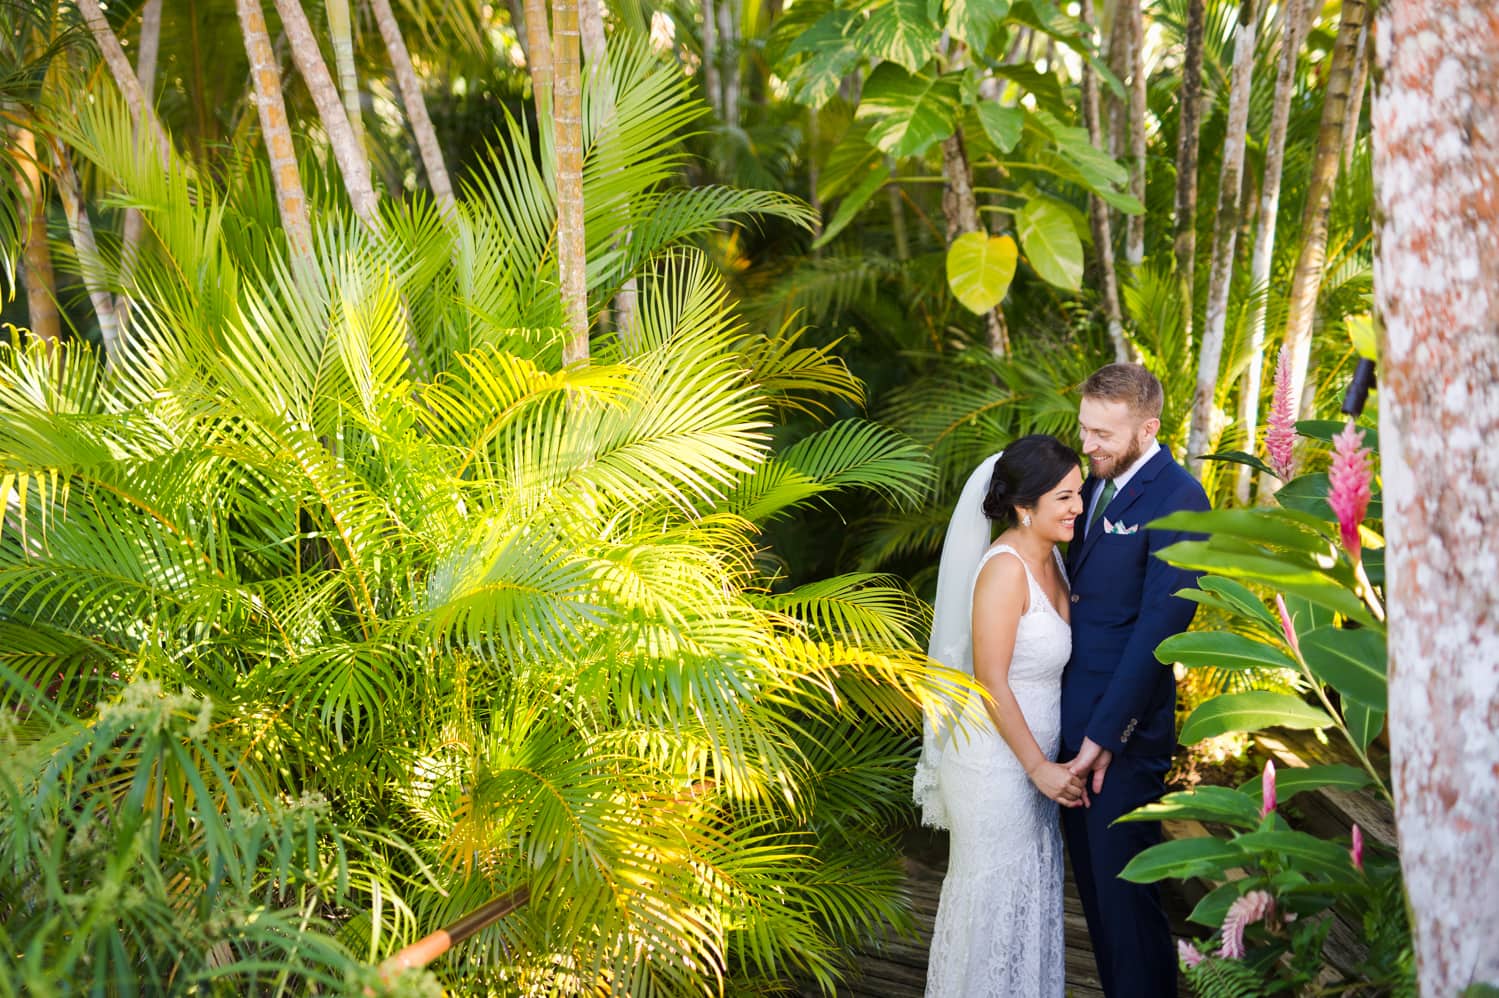 Puerto Rico destination wedding photography at Hacienda Azucena by photographer Camille Fontanez